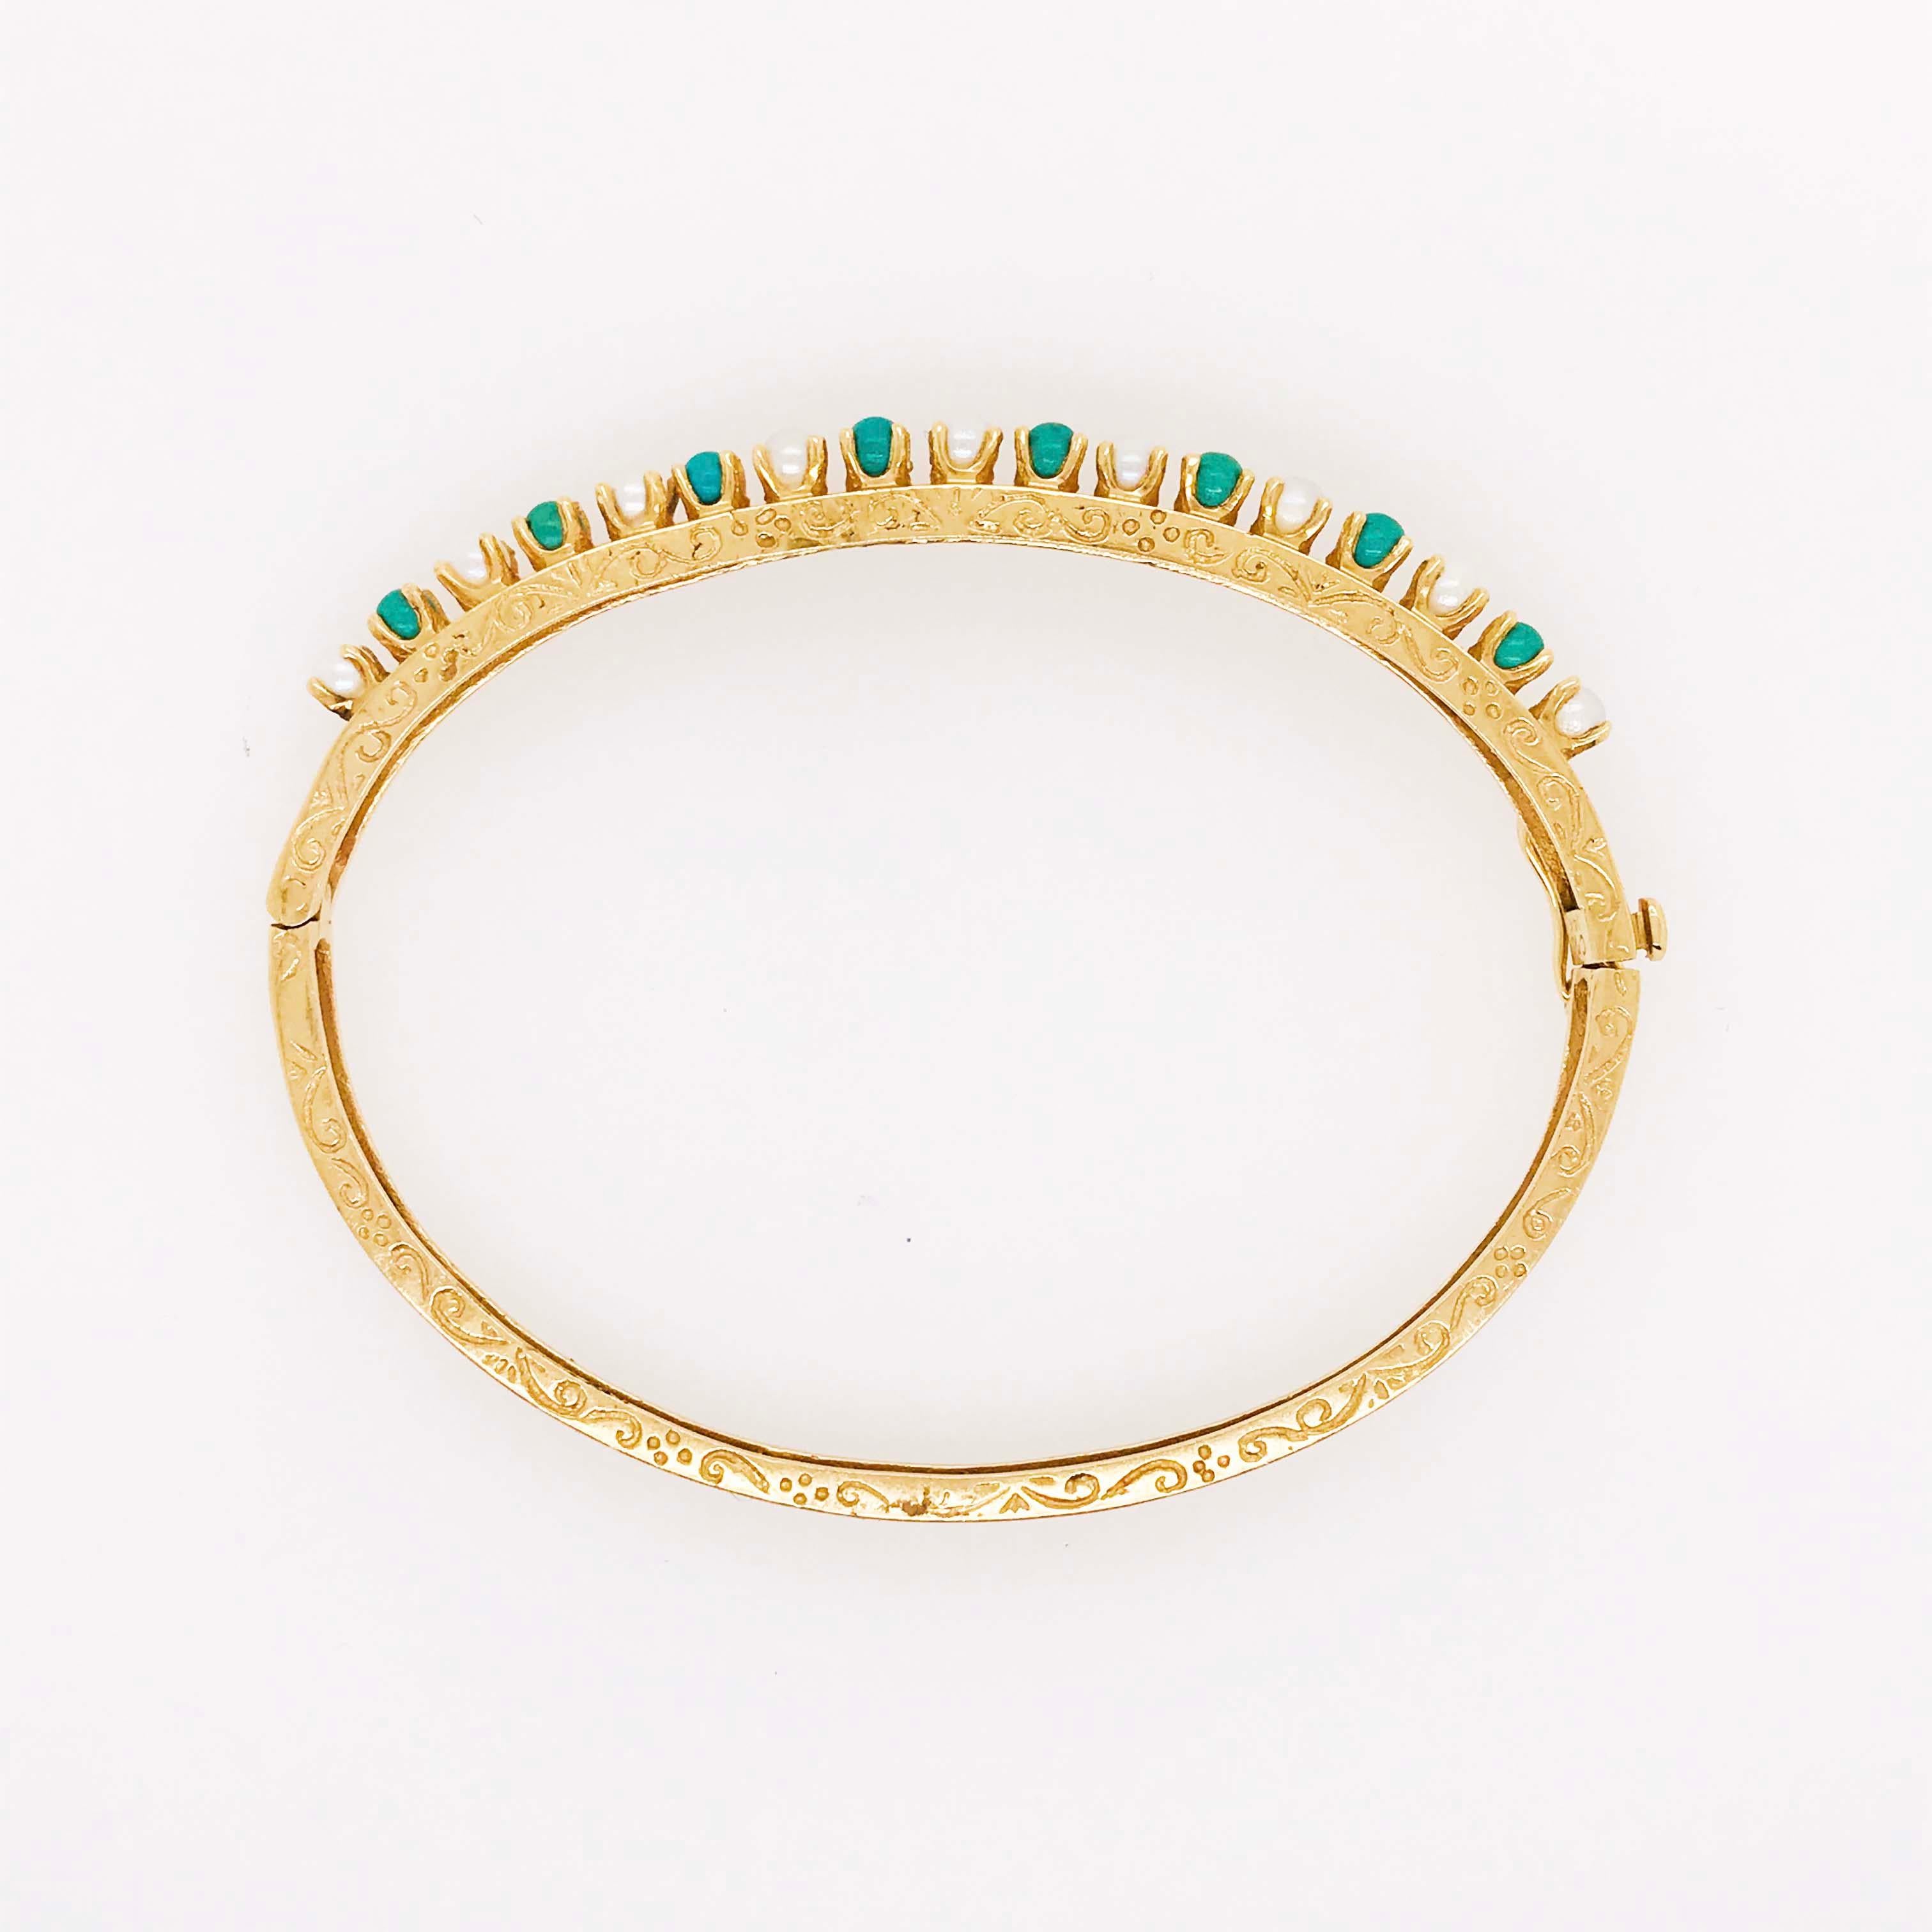 Women's Antique and Original Pearl and Amazonite Bangle Bracelet, 14 Karat Gold Genuine